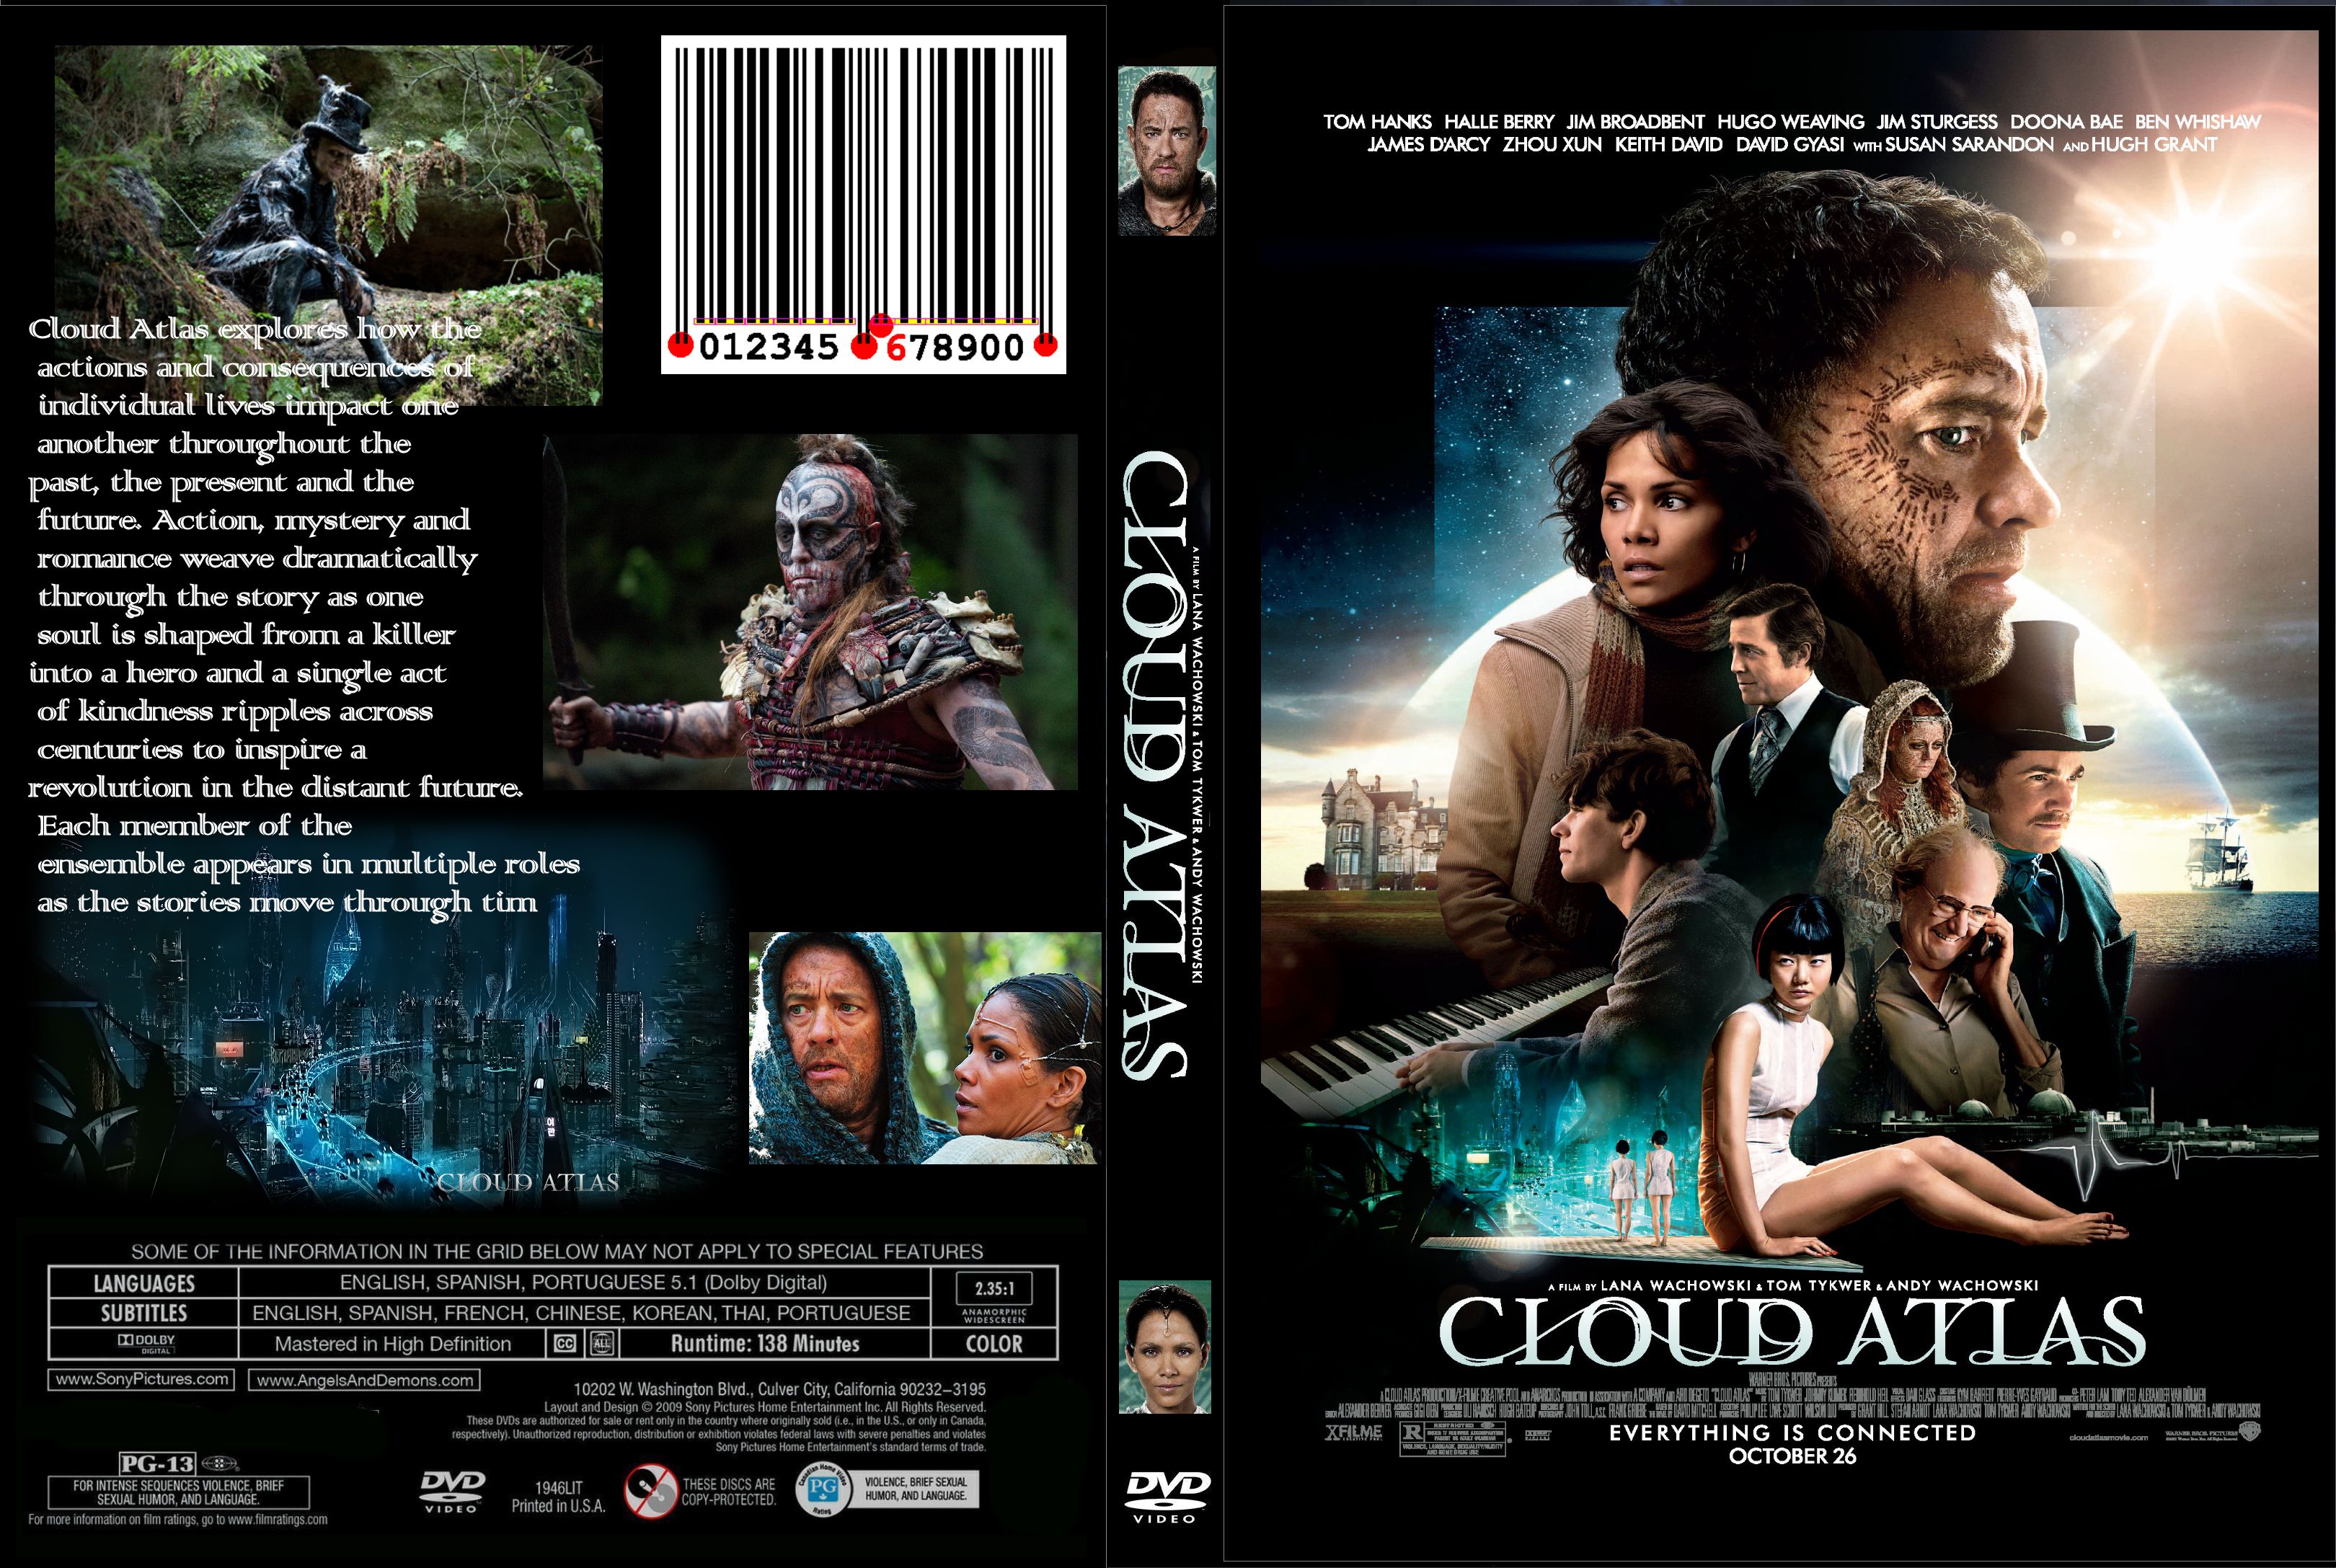 Cloud atlas movie free download utorrent for pc camelot season 2 torrent